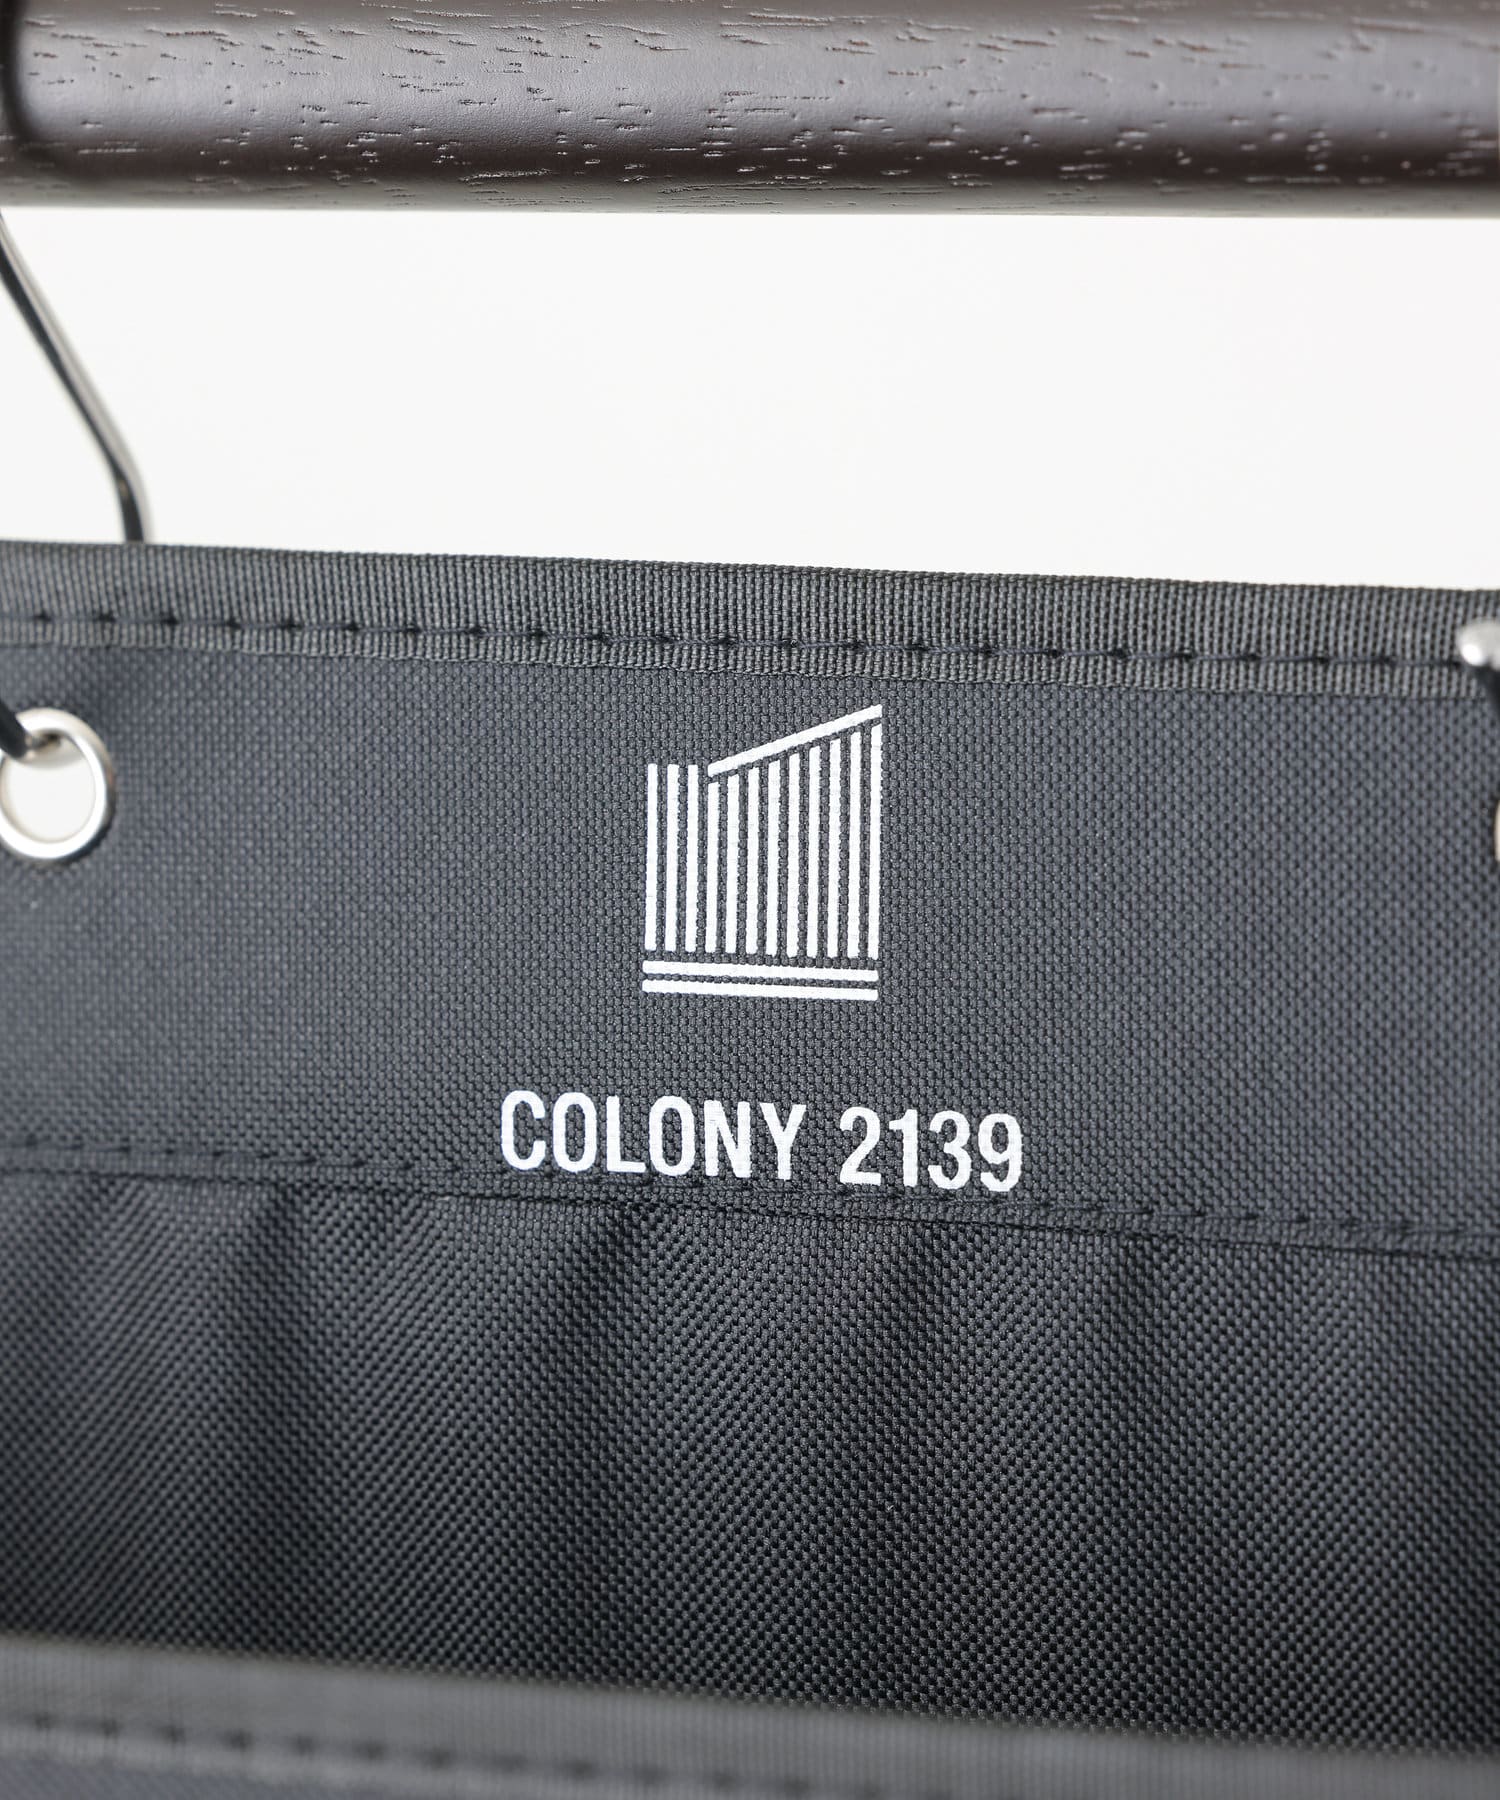 COLONY 2139(コロニー トゥーワンスリーナイン) 吊り下げ収納(小物)